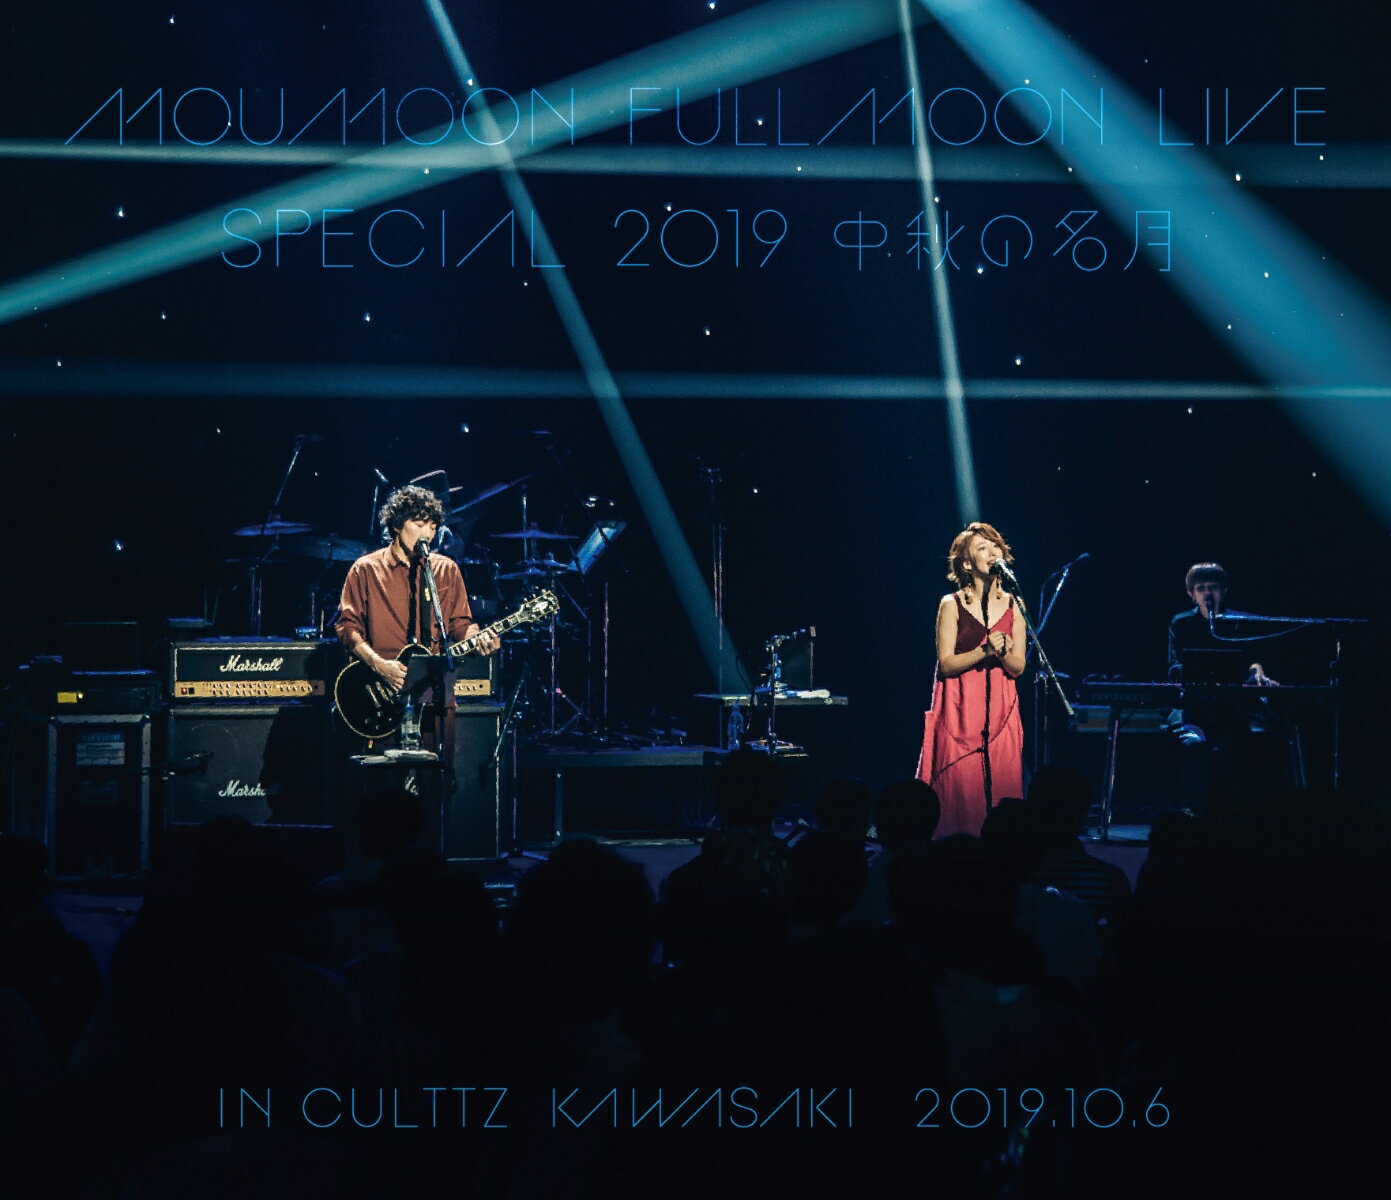 FULLMOON LIVE SPECIAL 2019 ～中秋の名月～ IN CULTTZ KAWASAKI 2019.10.6【Blu-ray】 [ moumoon ]